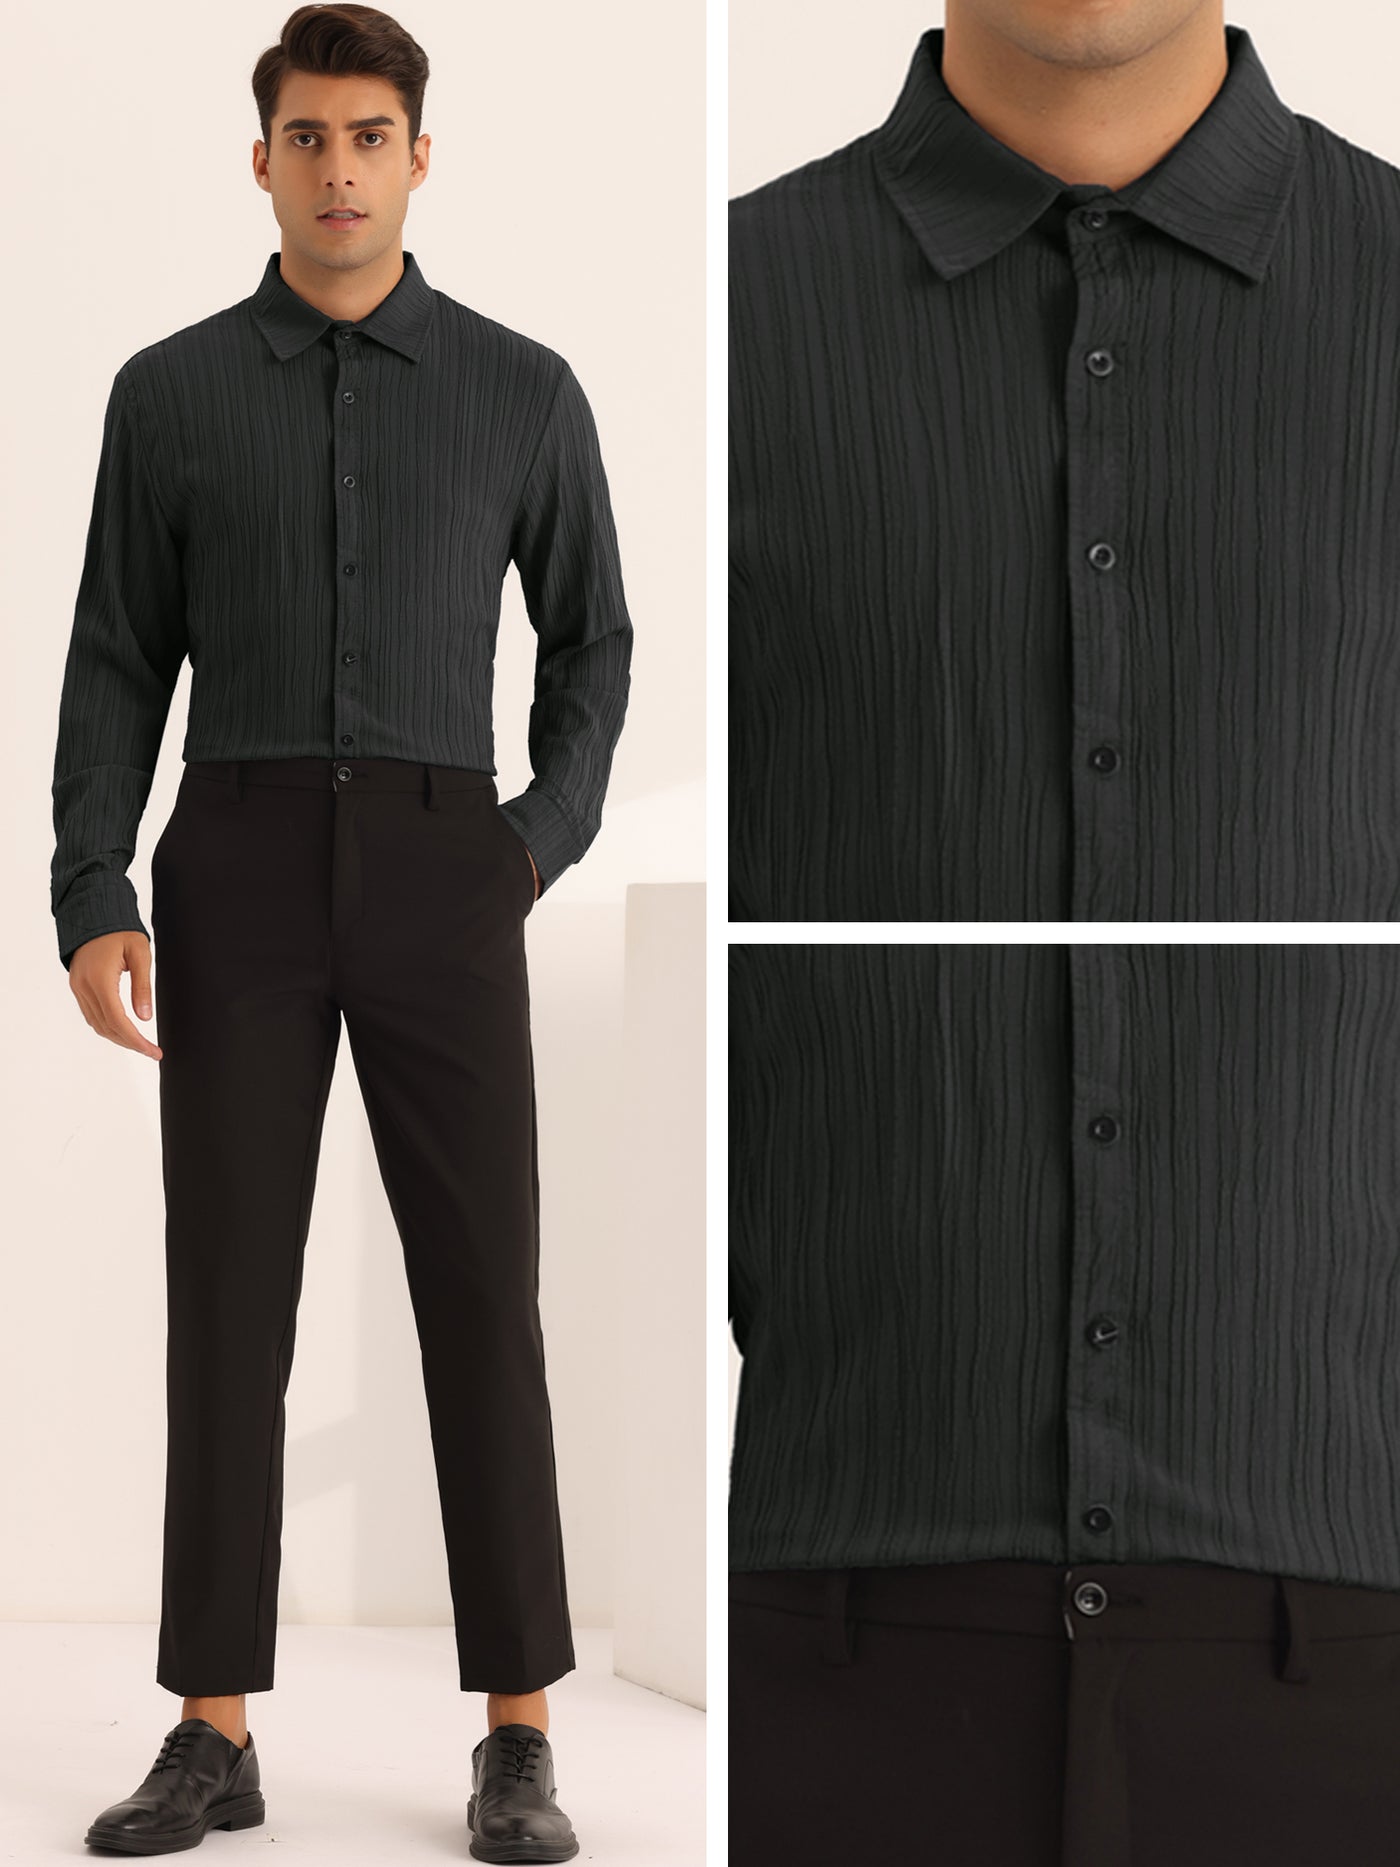 Bublédon Texture Dress Shirts for Men's Button Closure Long Sleeves Formal Pleats Shirt